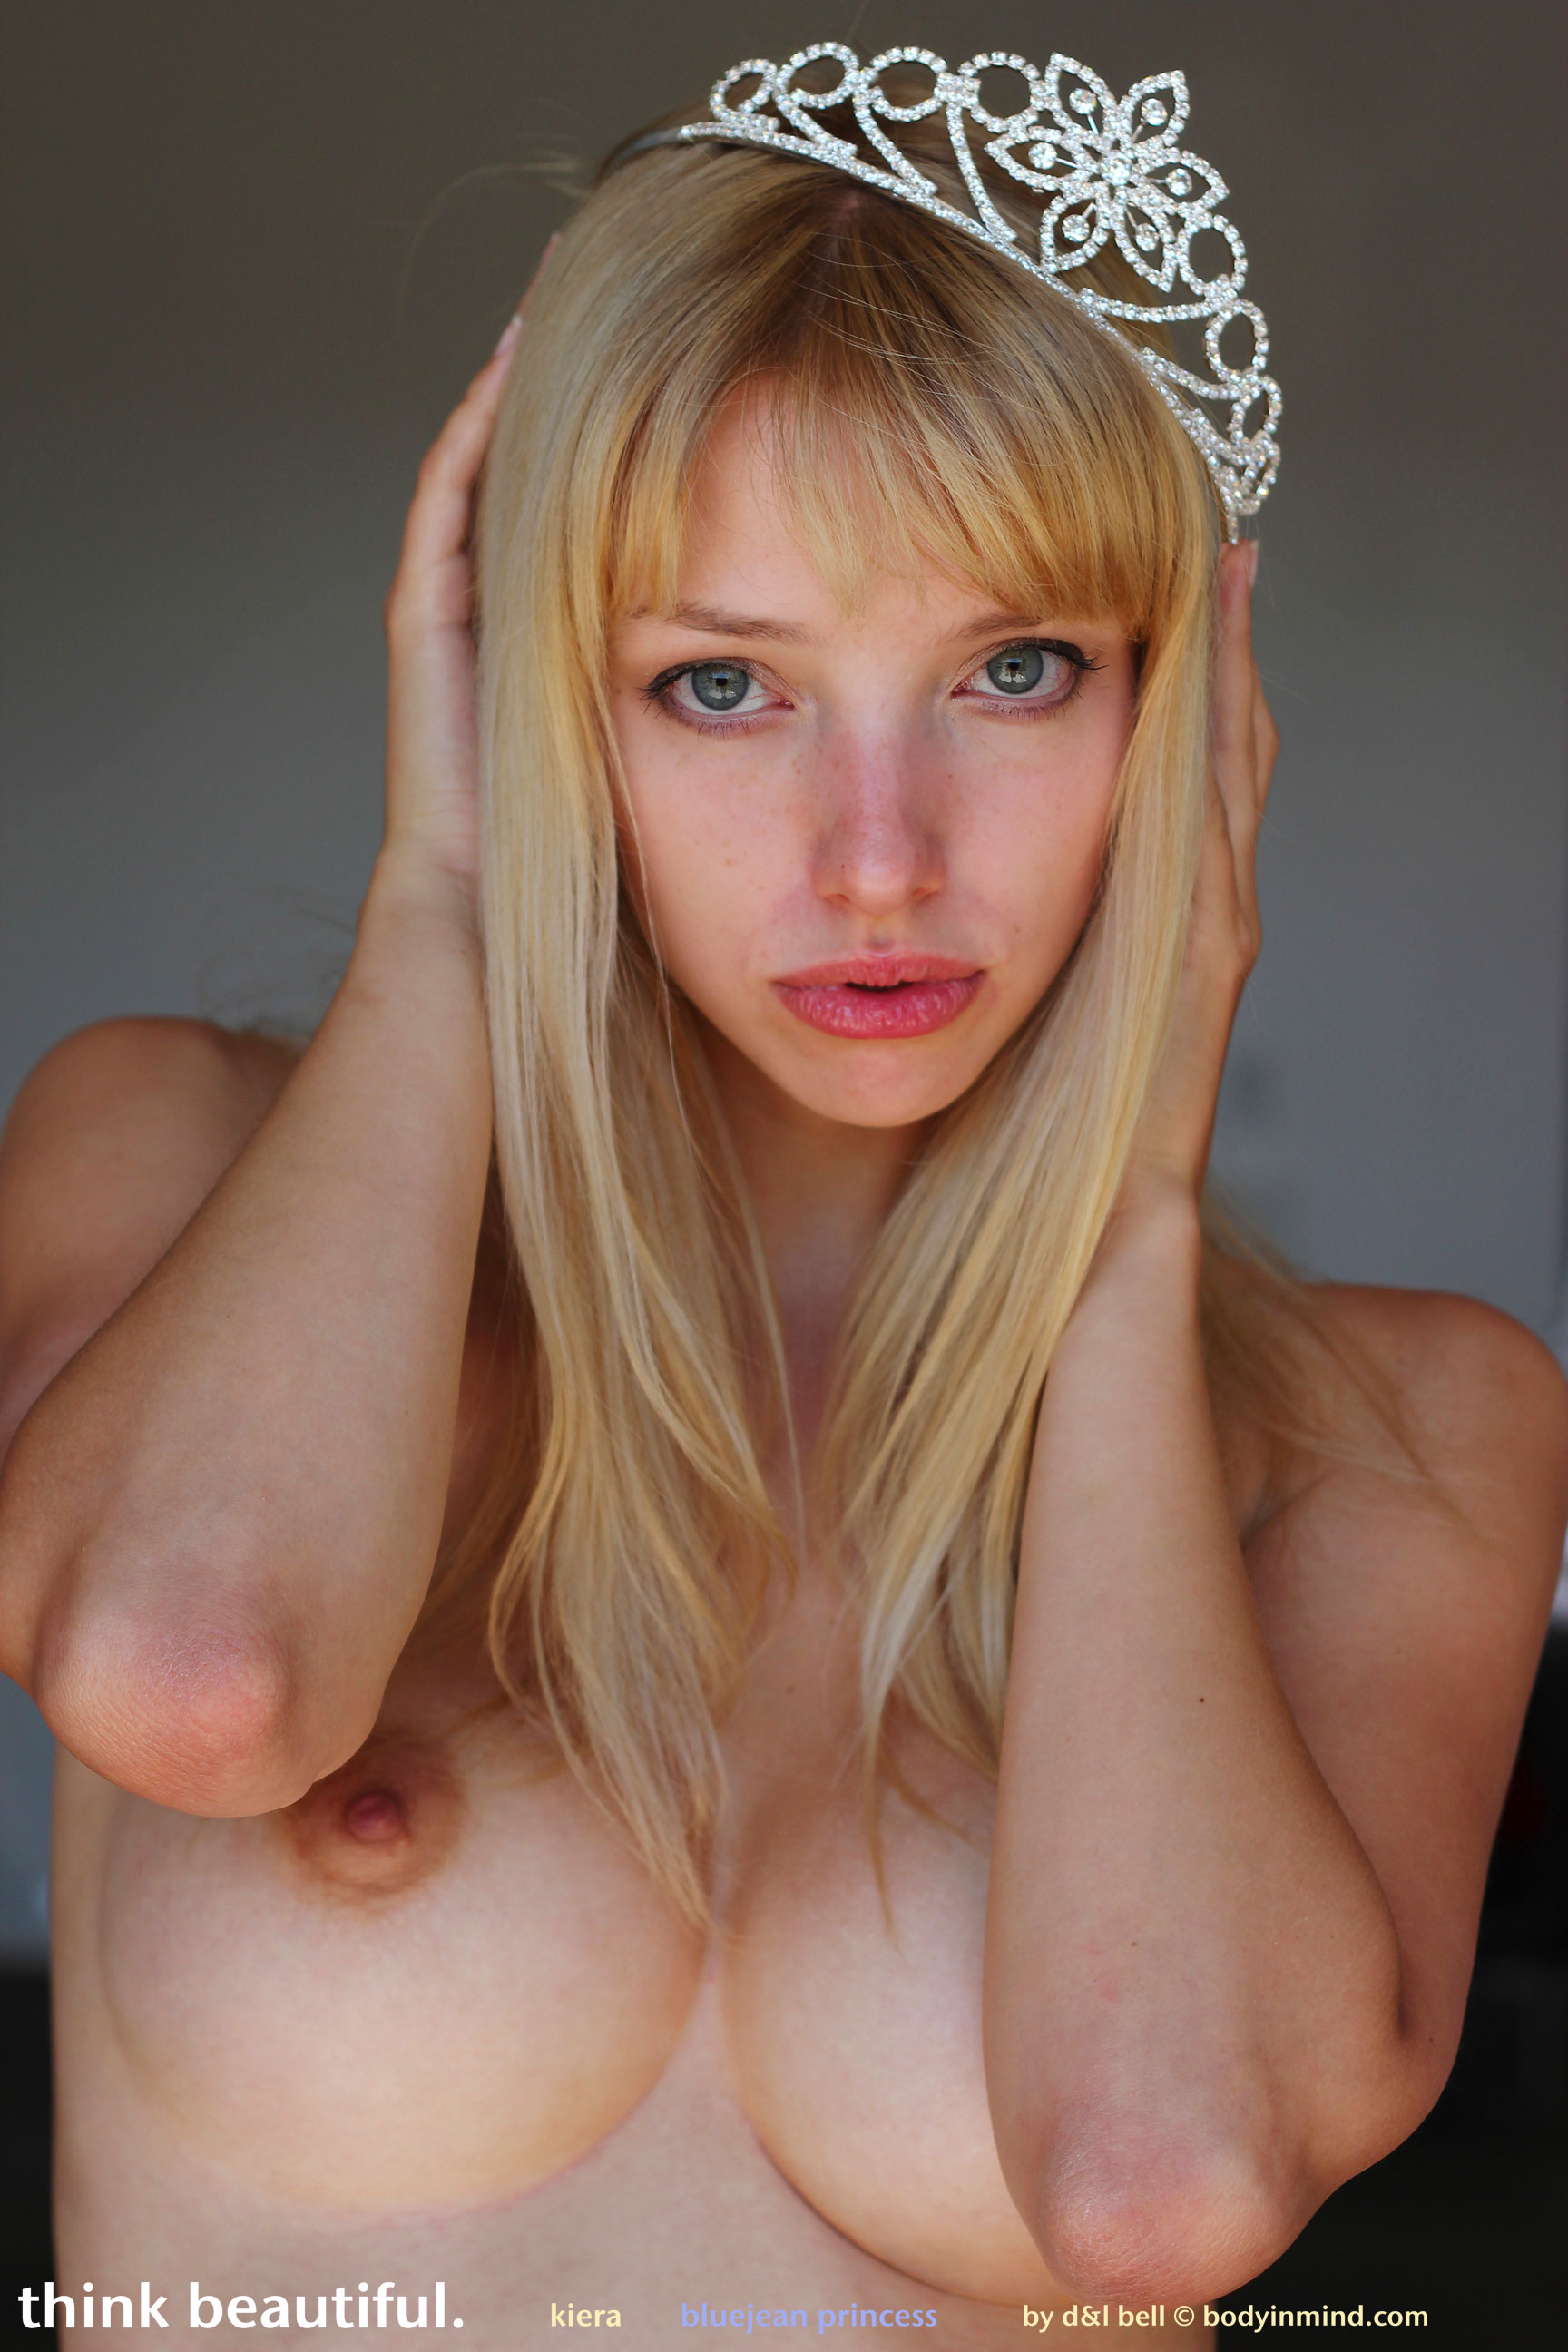 kiera-bluejean-princess-nude-bodyinmind-01